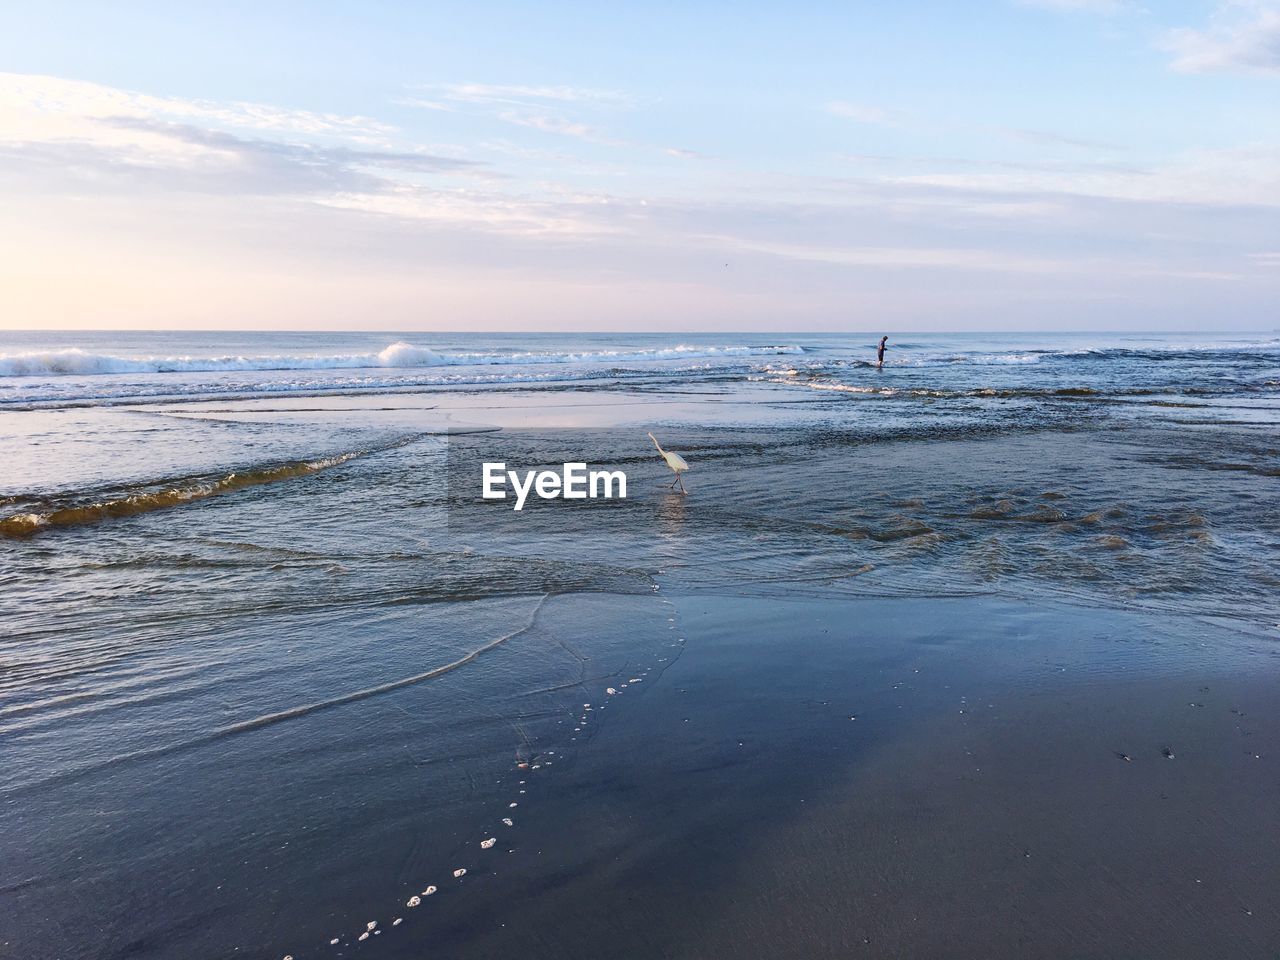 VIEW OF SWAN ON BEACH AGAINST SKY